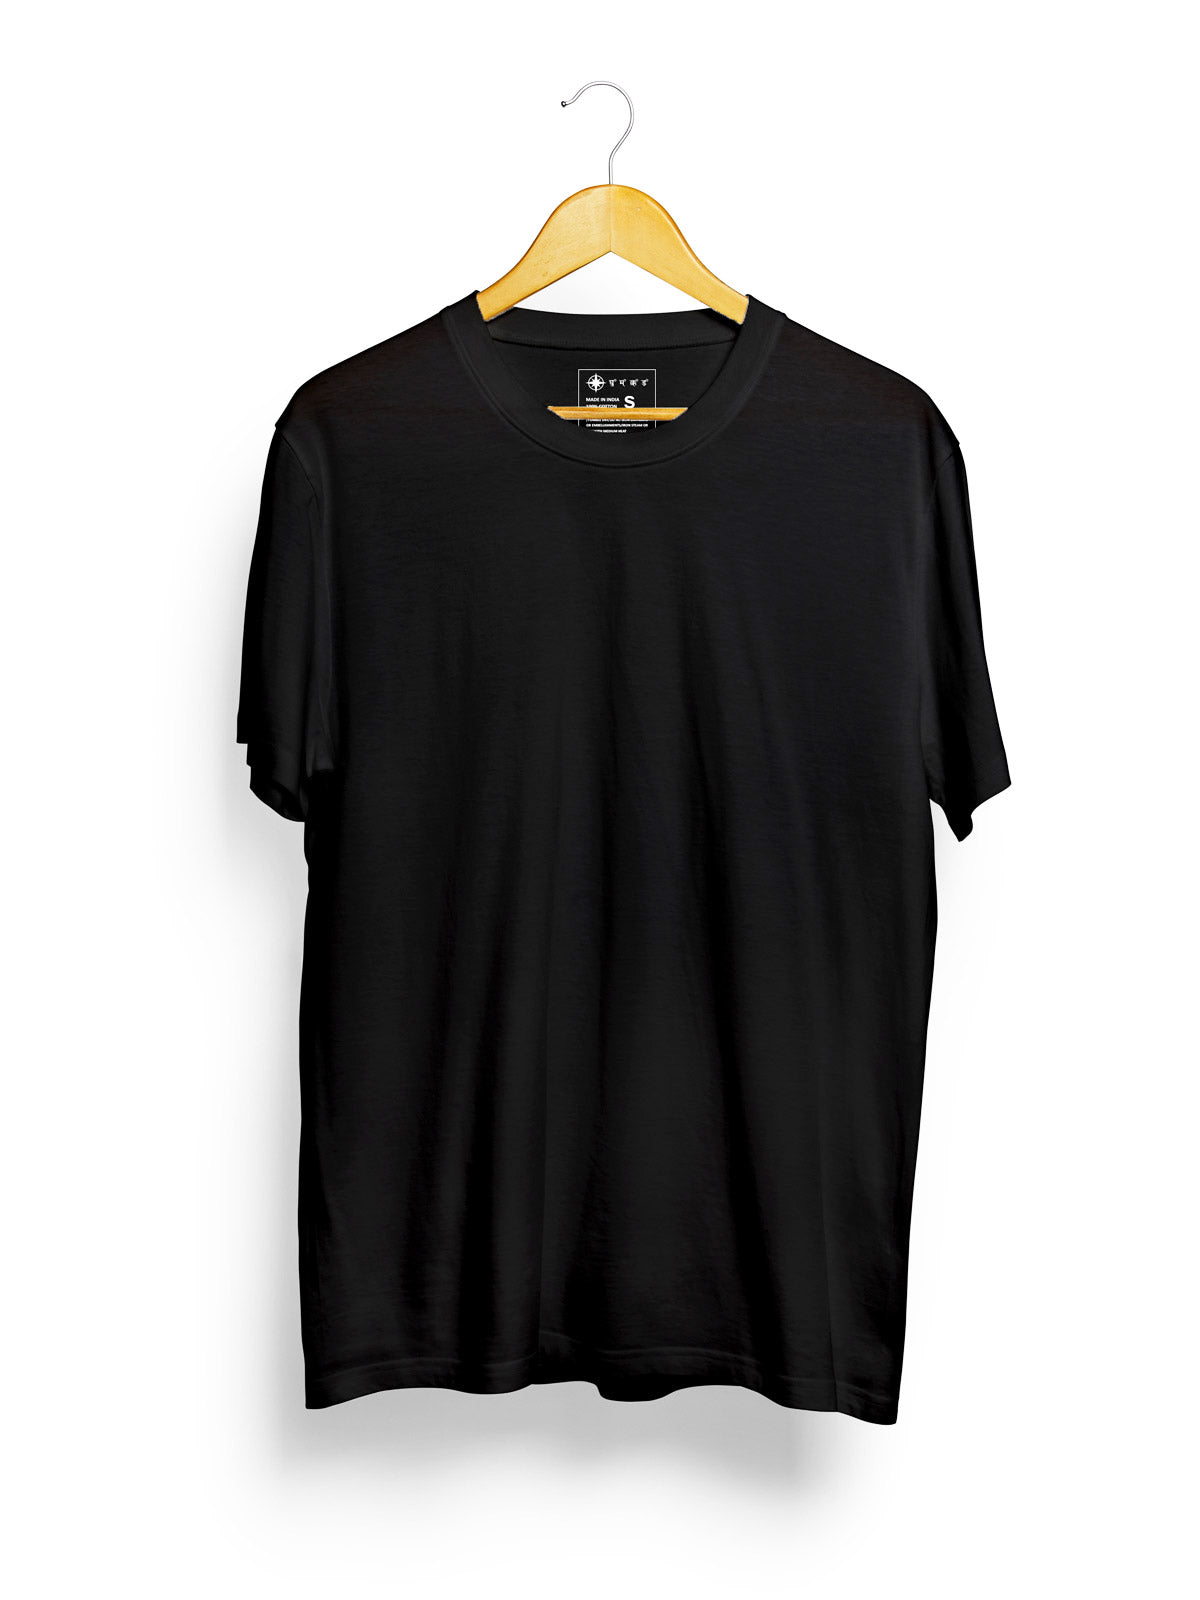 Black, Peach & Light Grey  Unisex Plain T shirt Combo by shopghumakkad